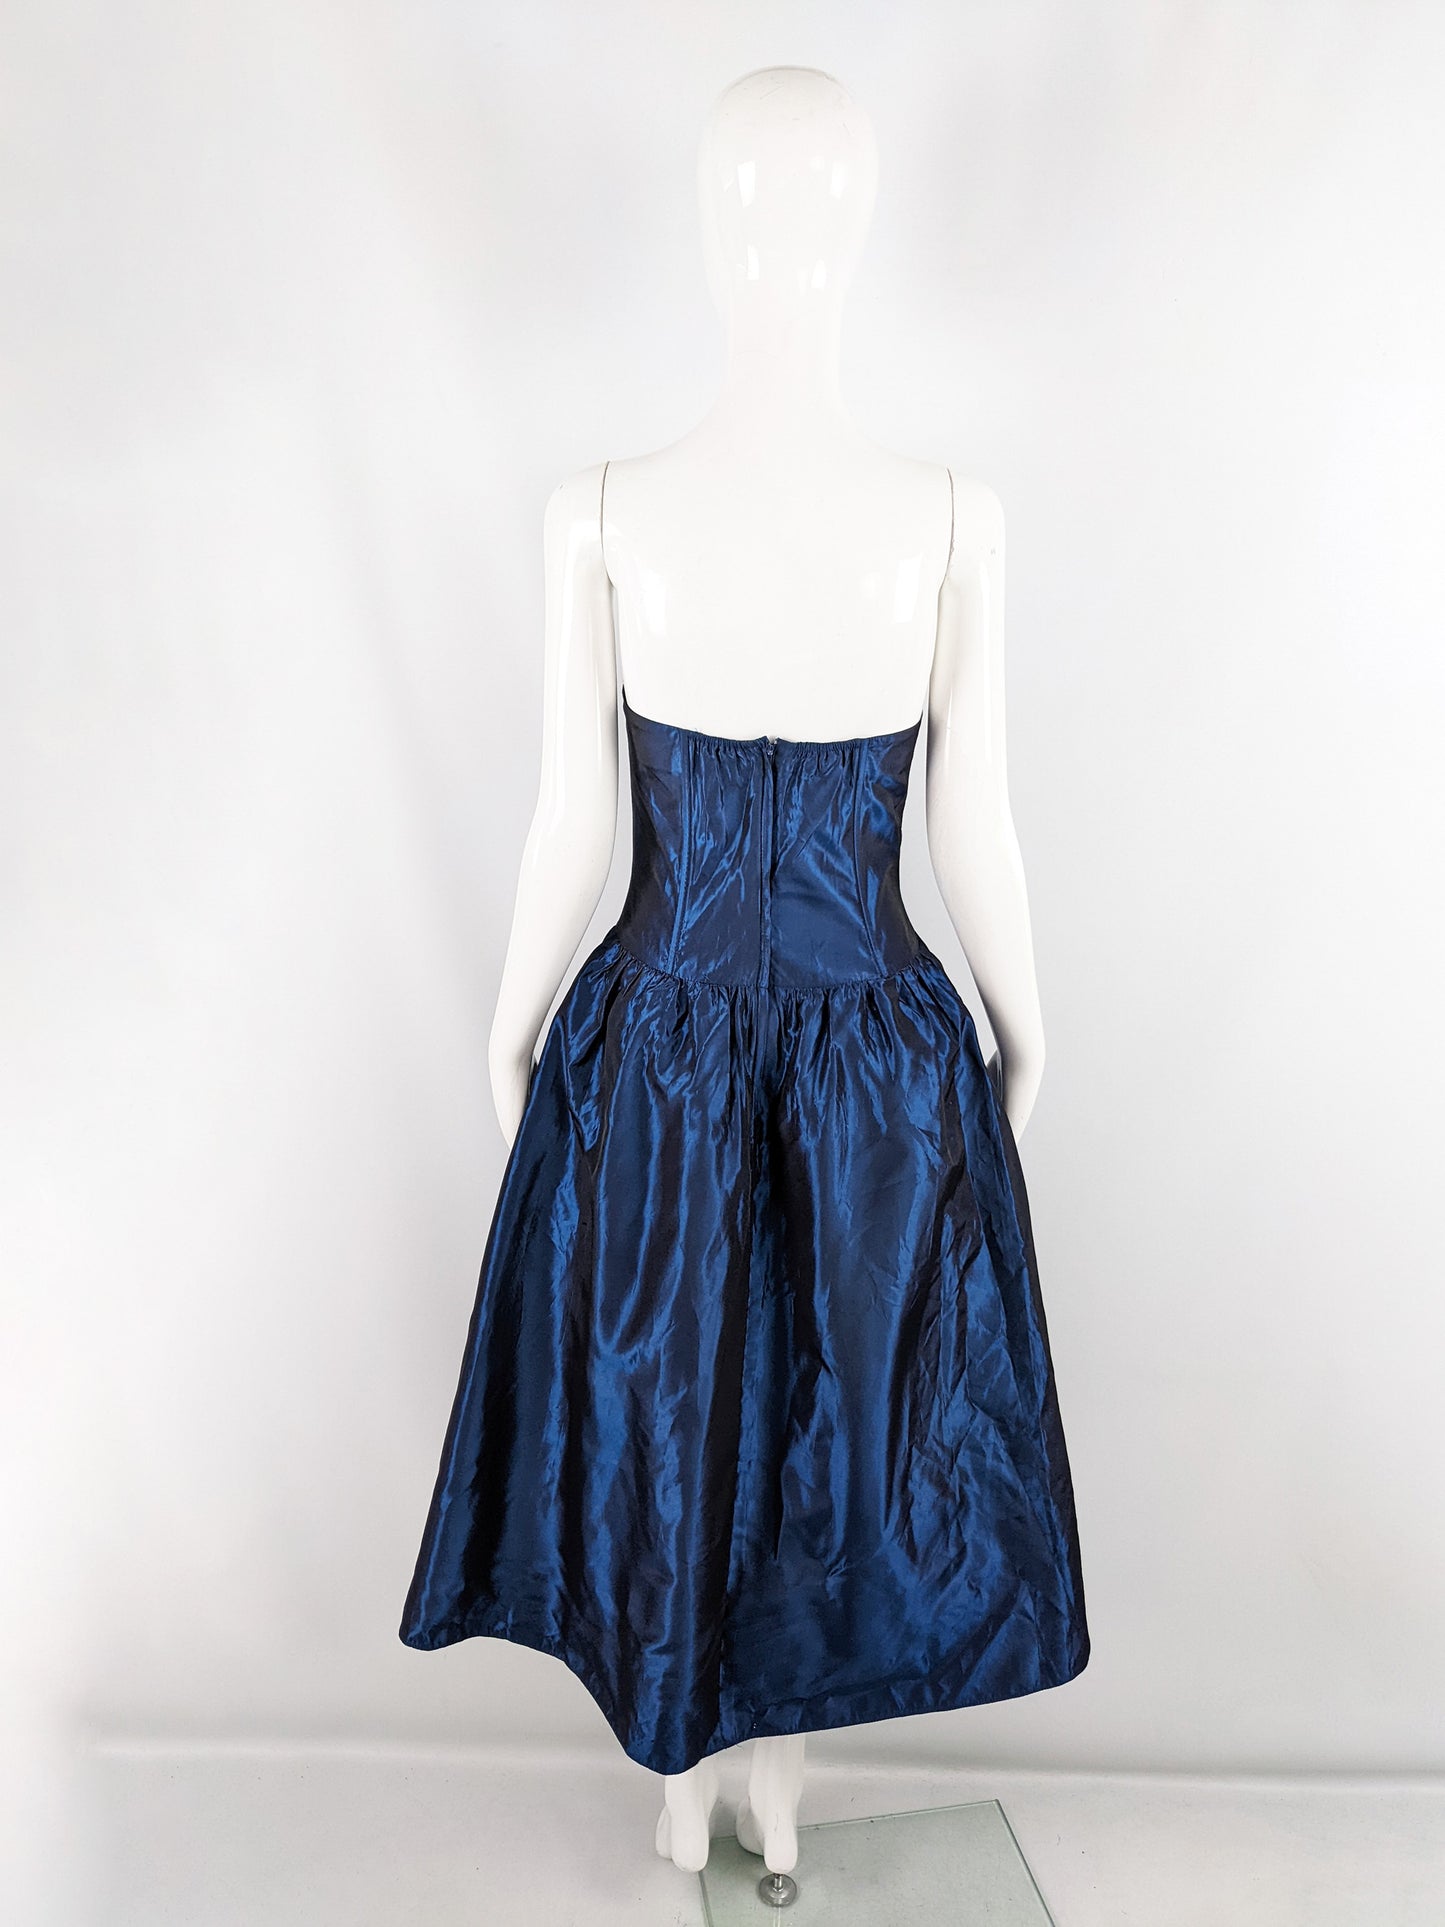 Kriss Vintage Iridescent Blue Taffeta Party Dress, 1980s